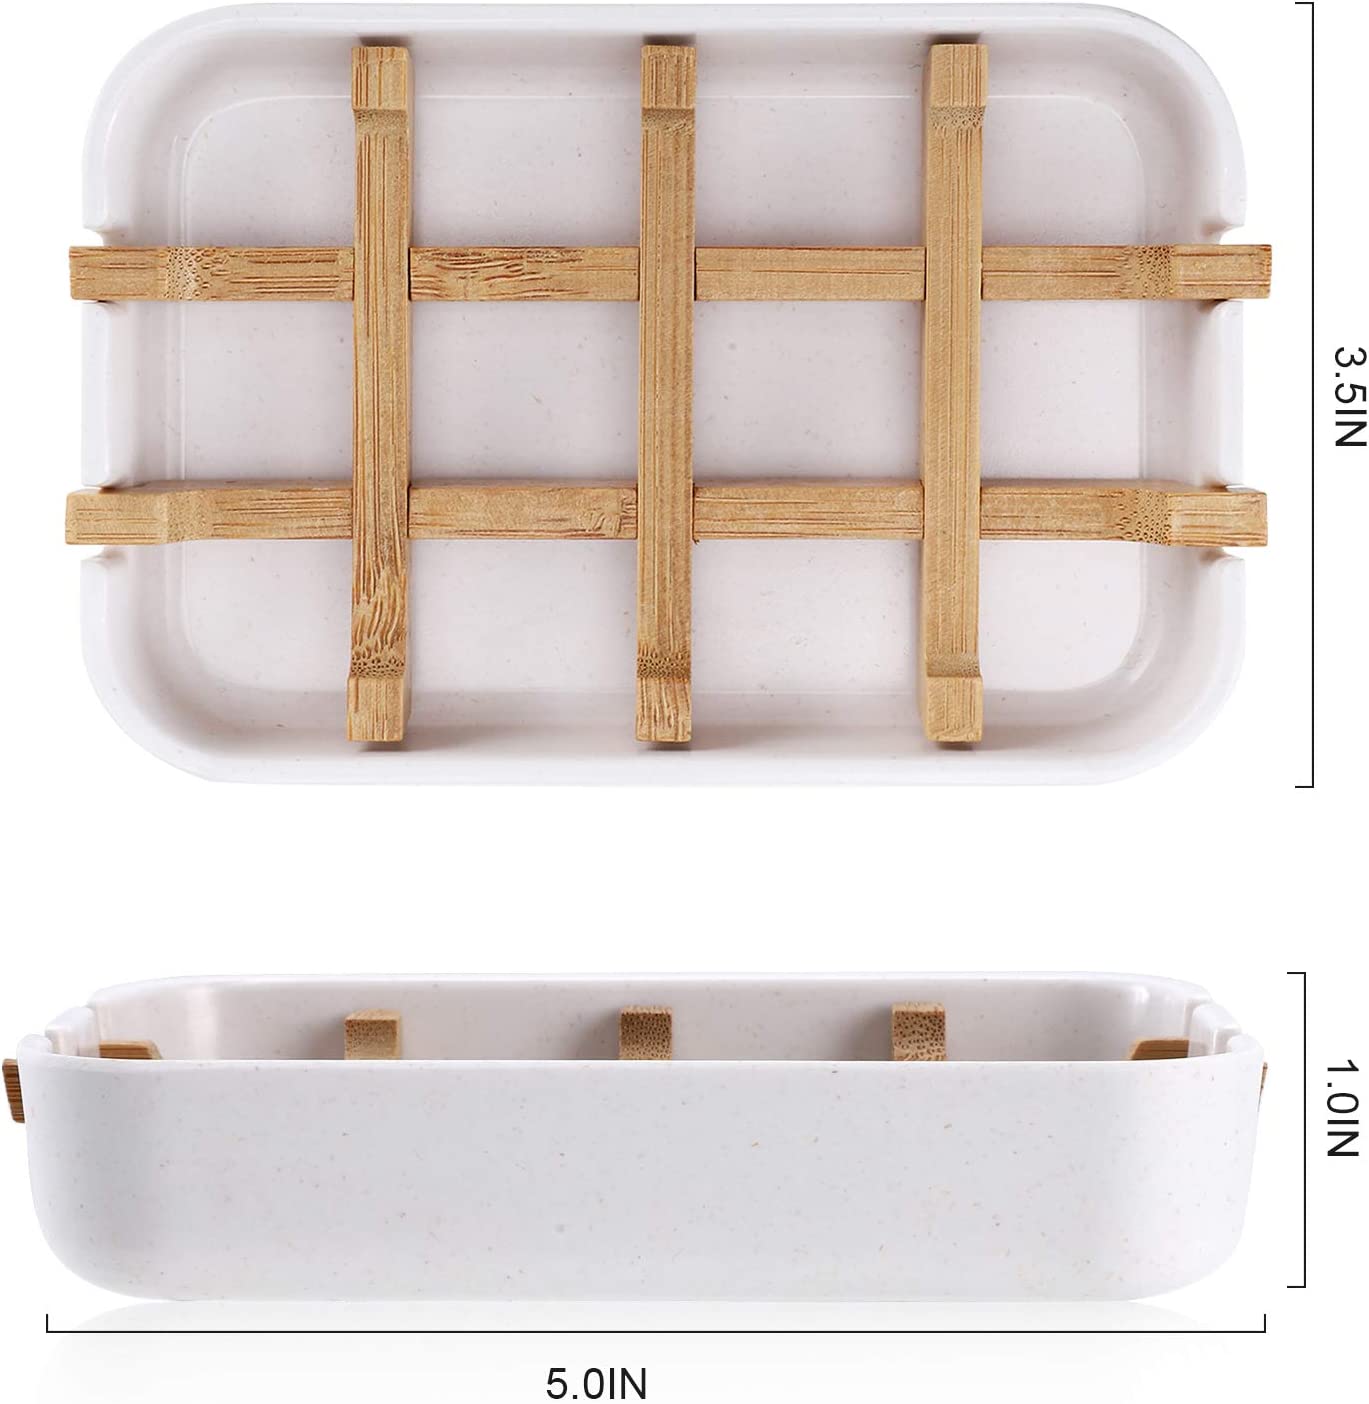 Modern Kitchen White Dish + Hand Soap bottles + scrubby + bamboo tray SET